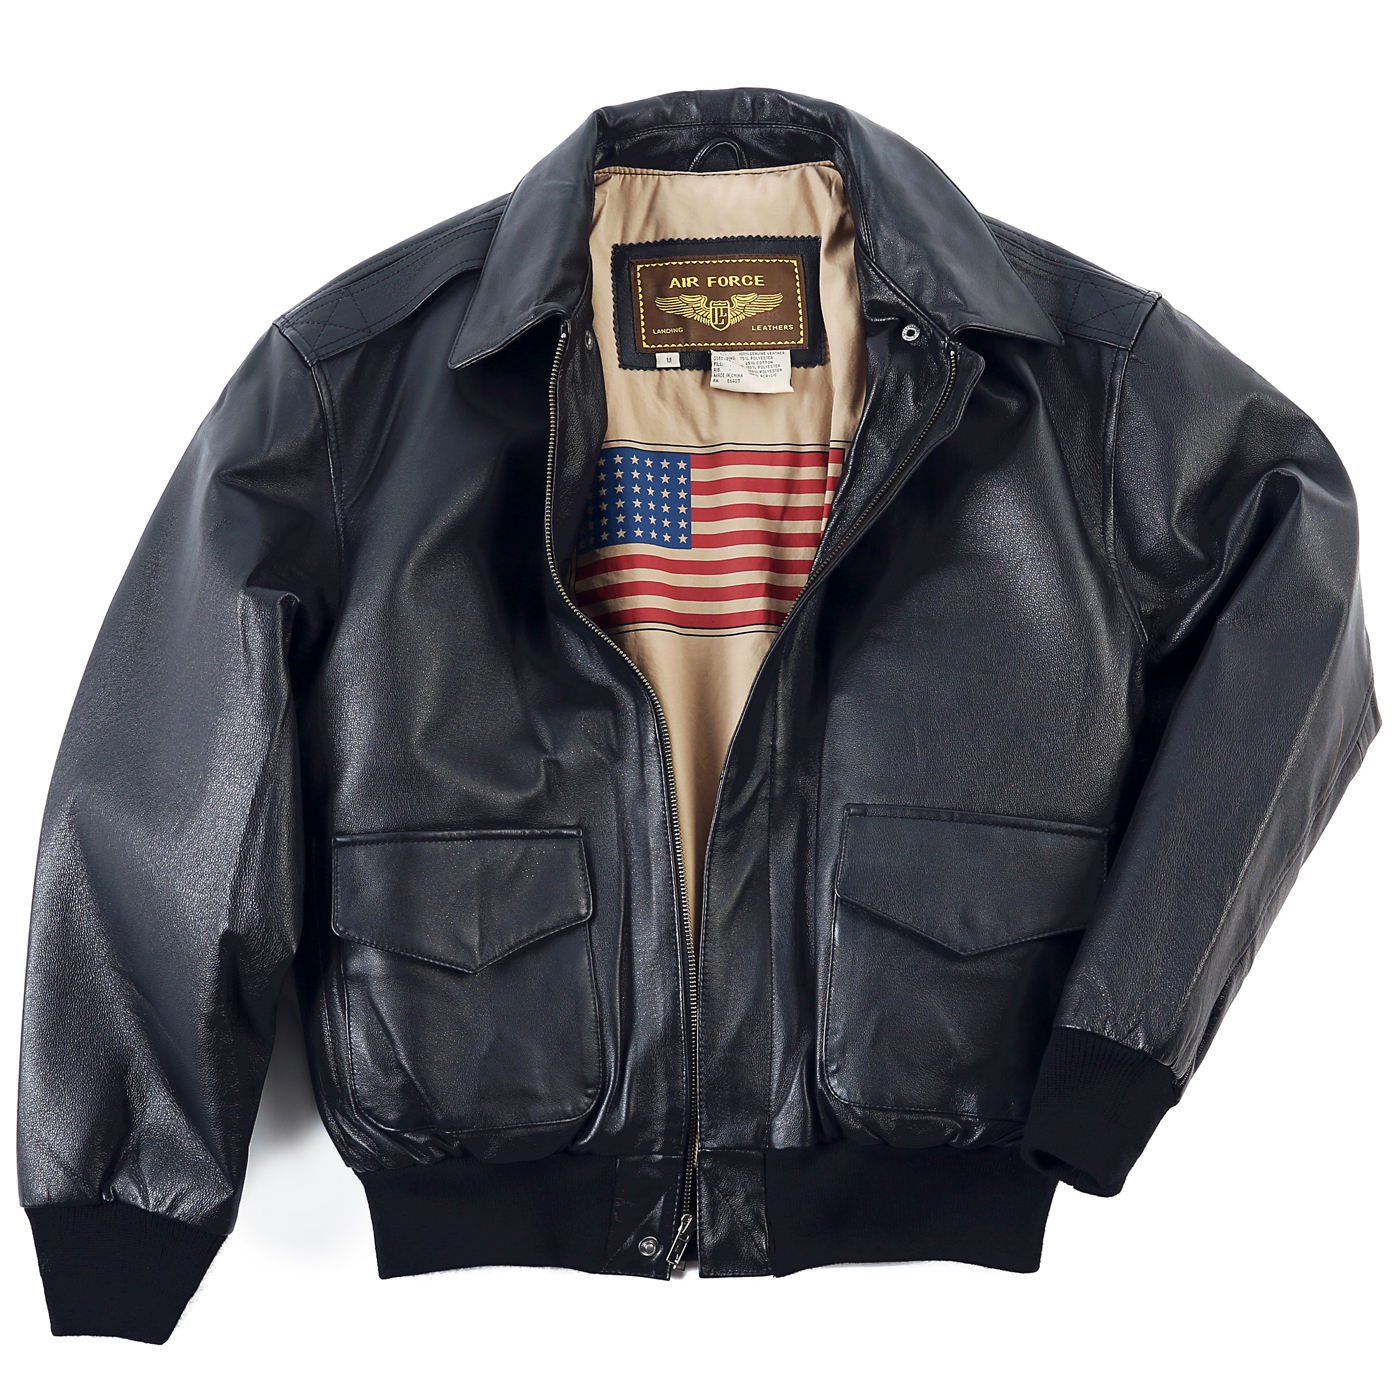 This bomber jacket is 60 percent off (Photo via eBay)